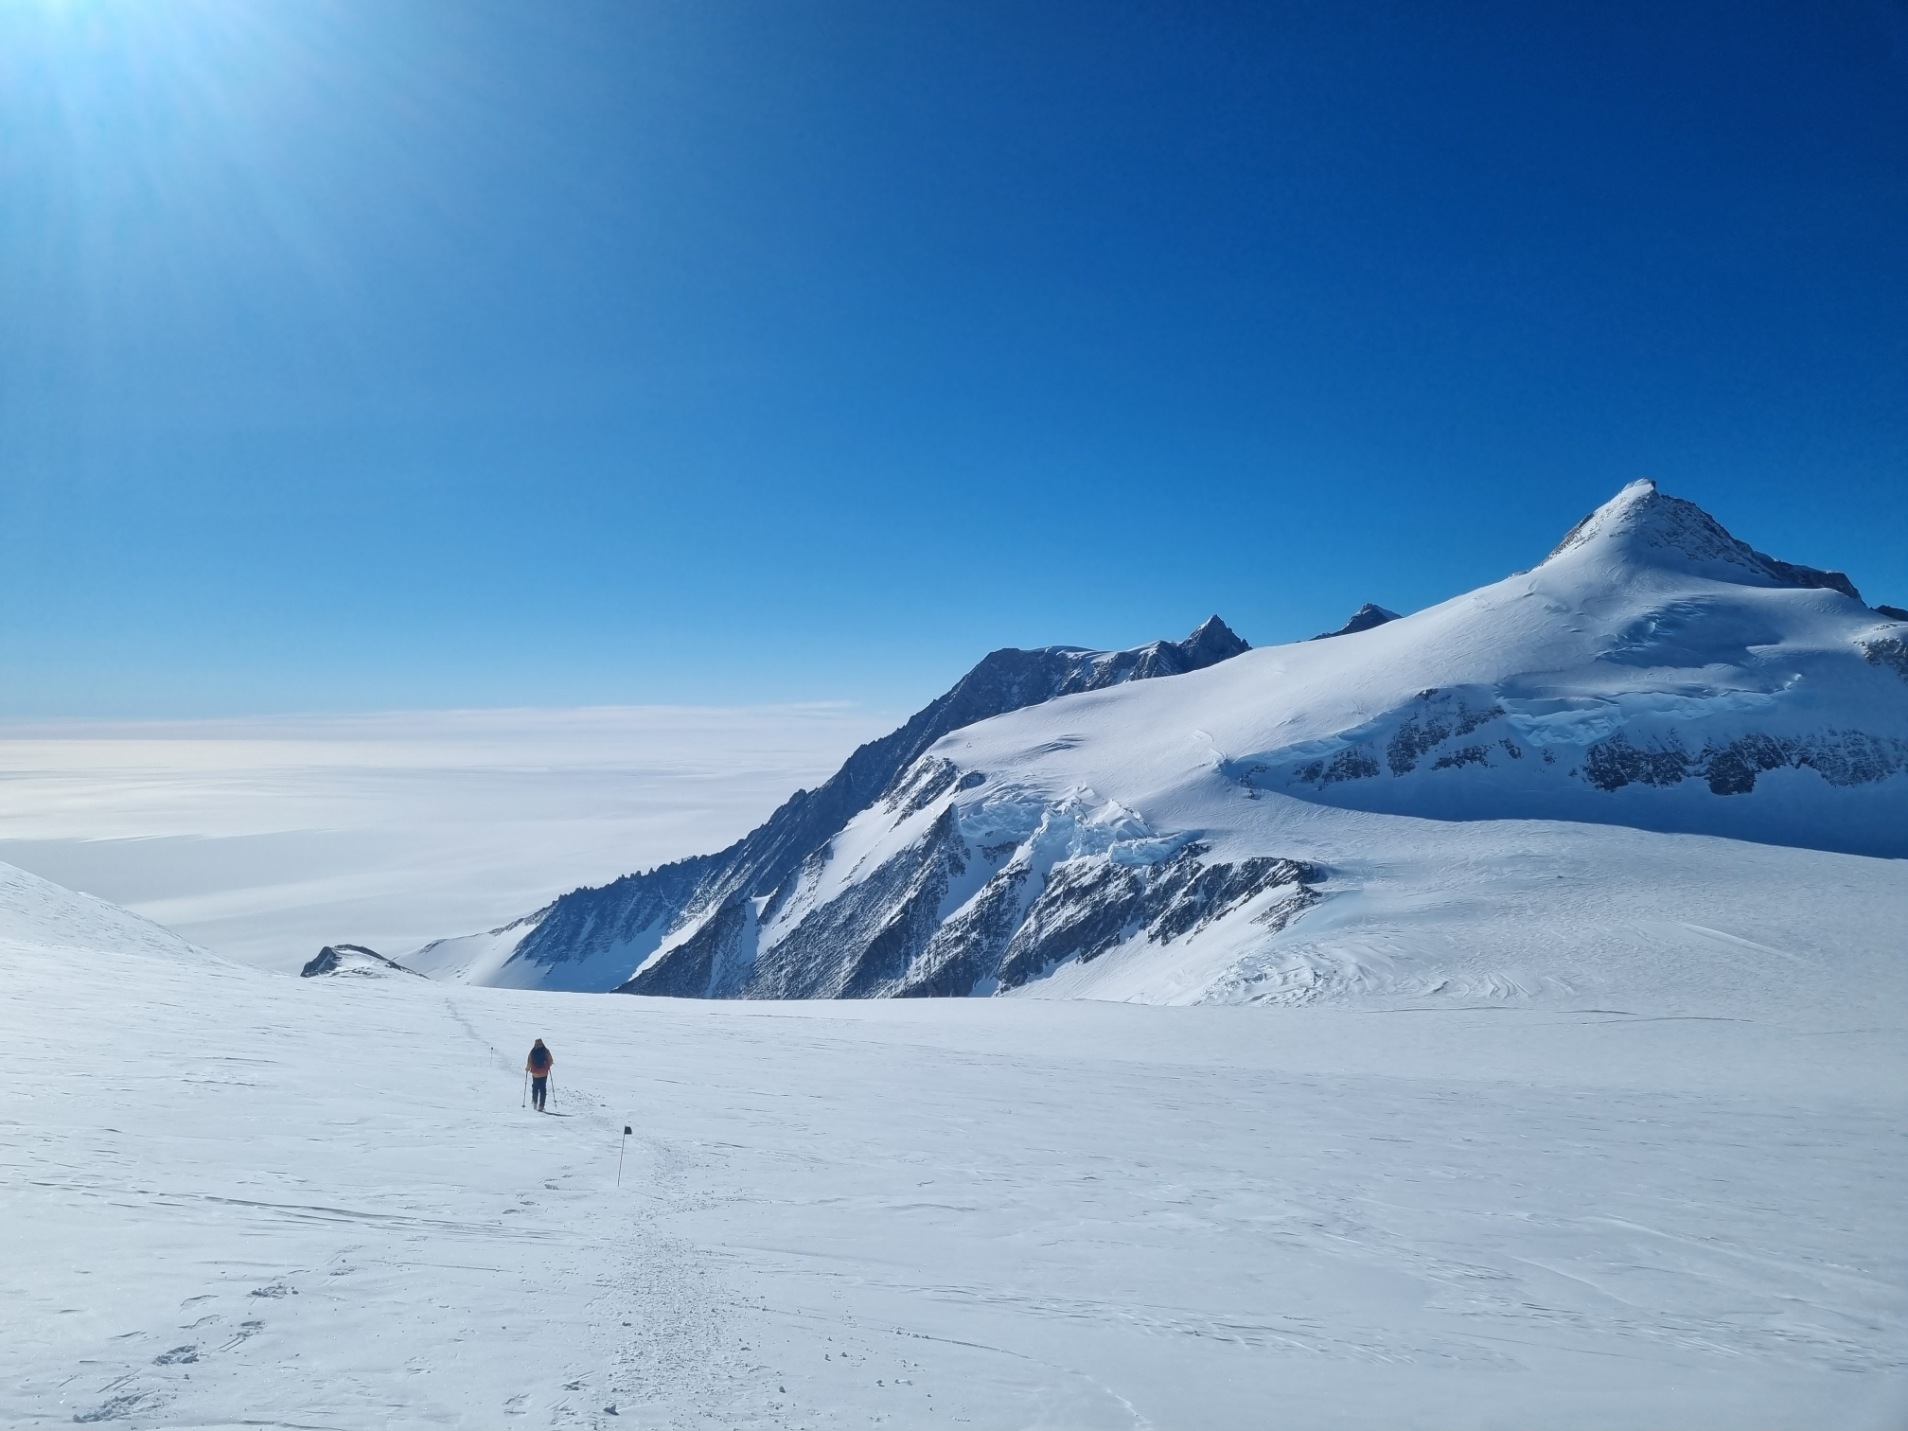 A climber ascending Vinson Massif